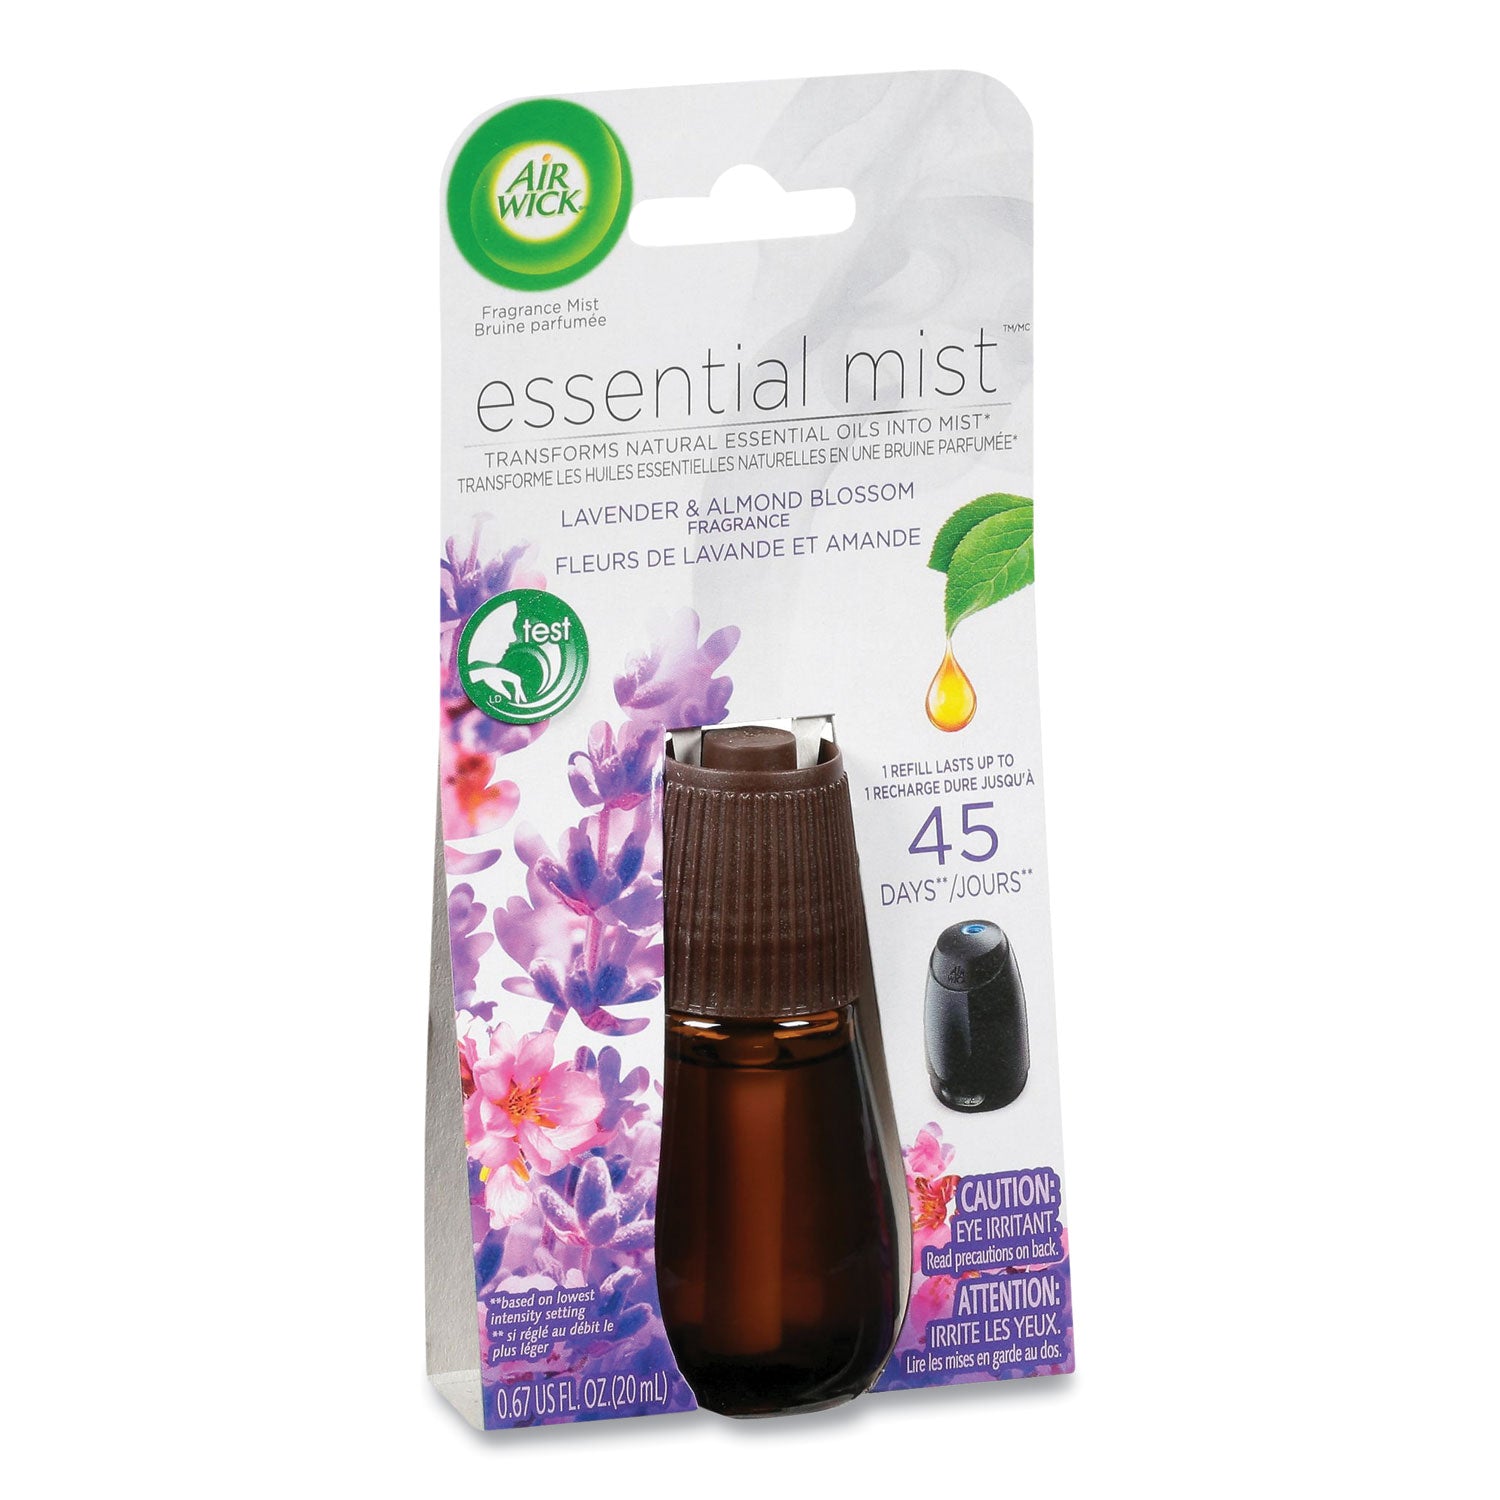 essential-mist-refill-lavender-and-almond-blossom-067-oz-bottle_rac98552ea - 2